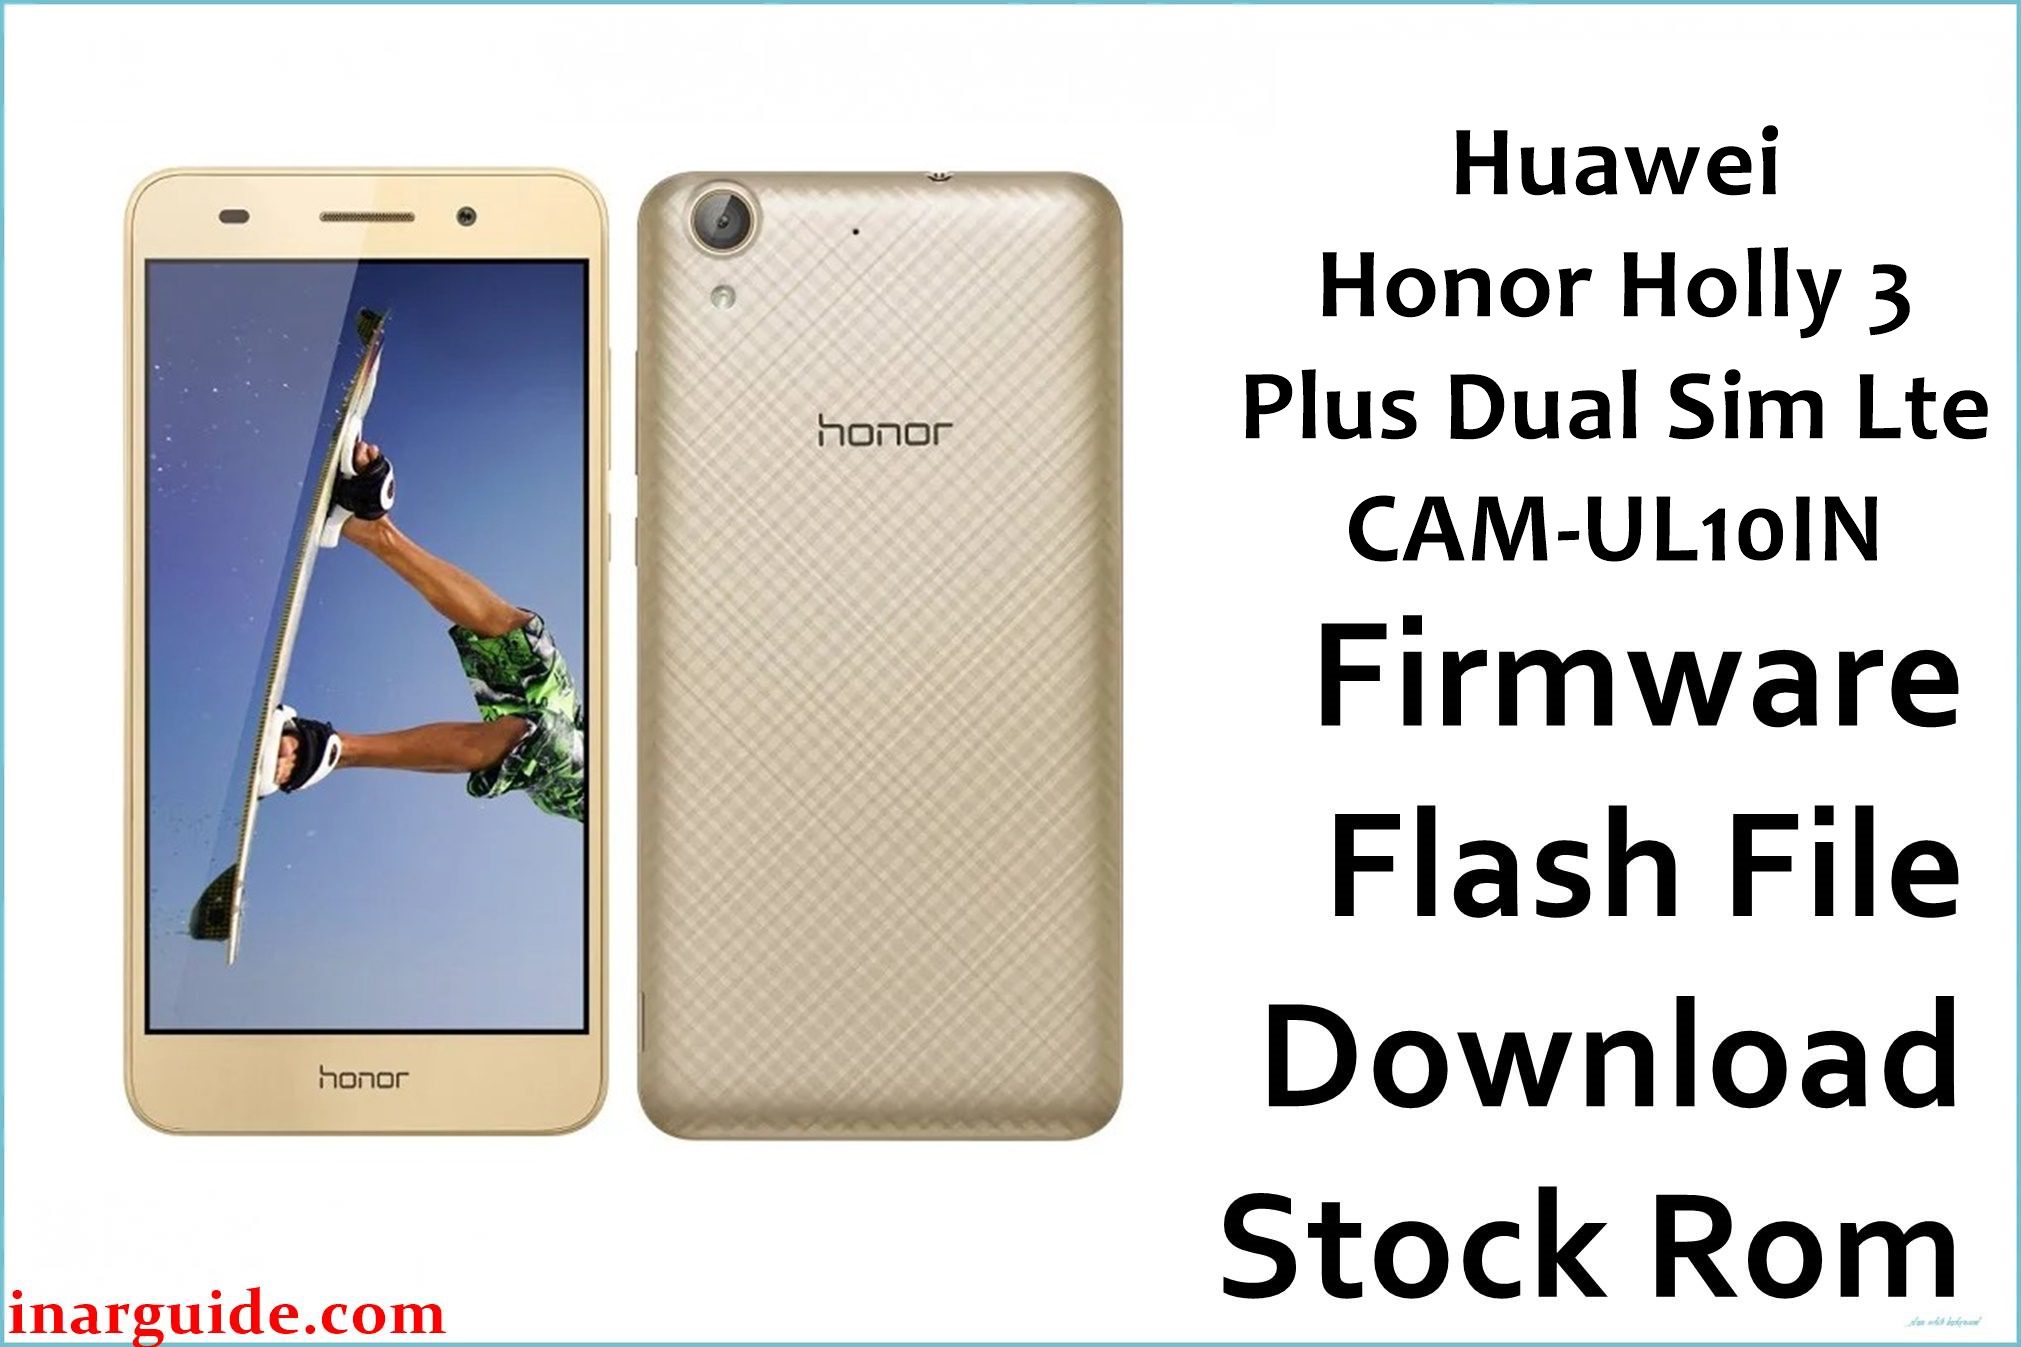 Huawei Honor Holly 3 Plus Dual Sim Lte CAM UL10IN